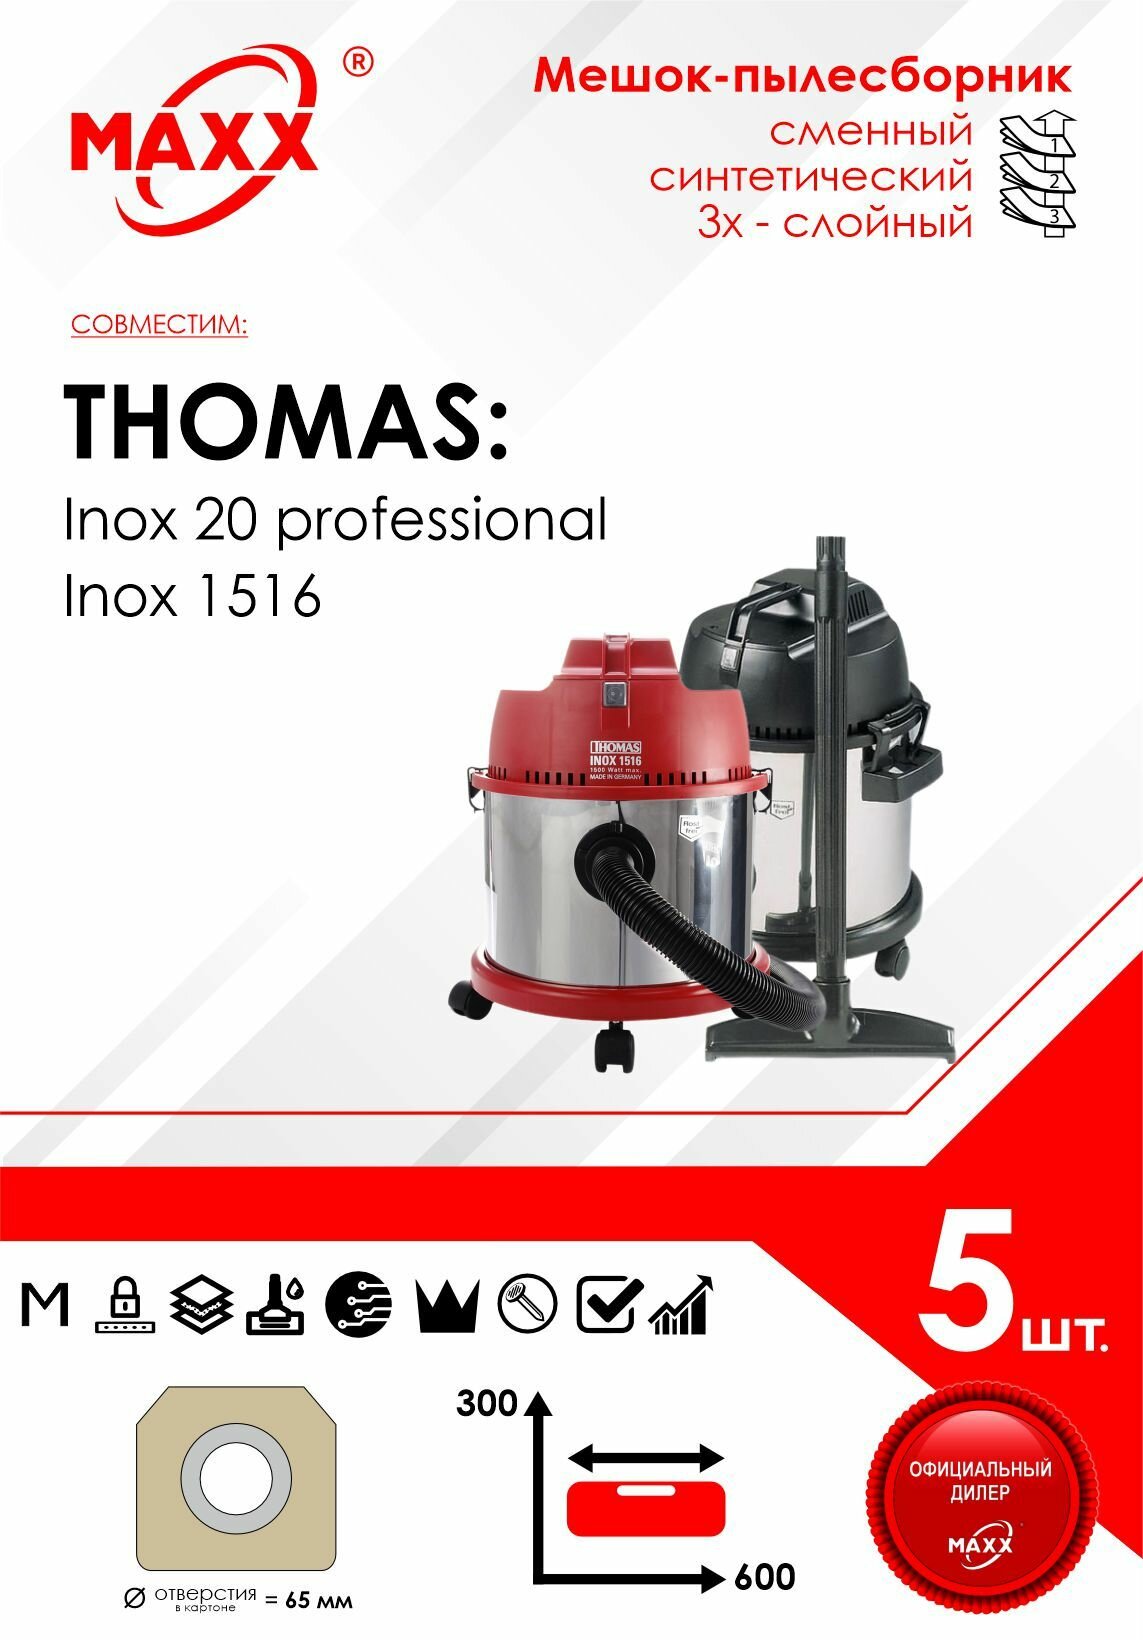 Мешок - пылесборник 5 шт. для пылесоса Thomas Inox 20 Professional, Thomas Inox